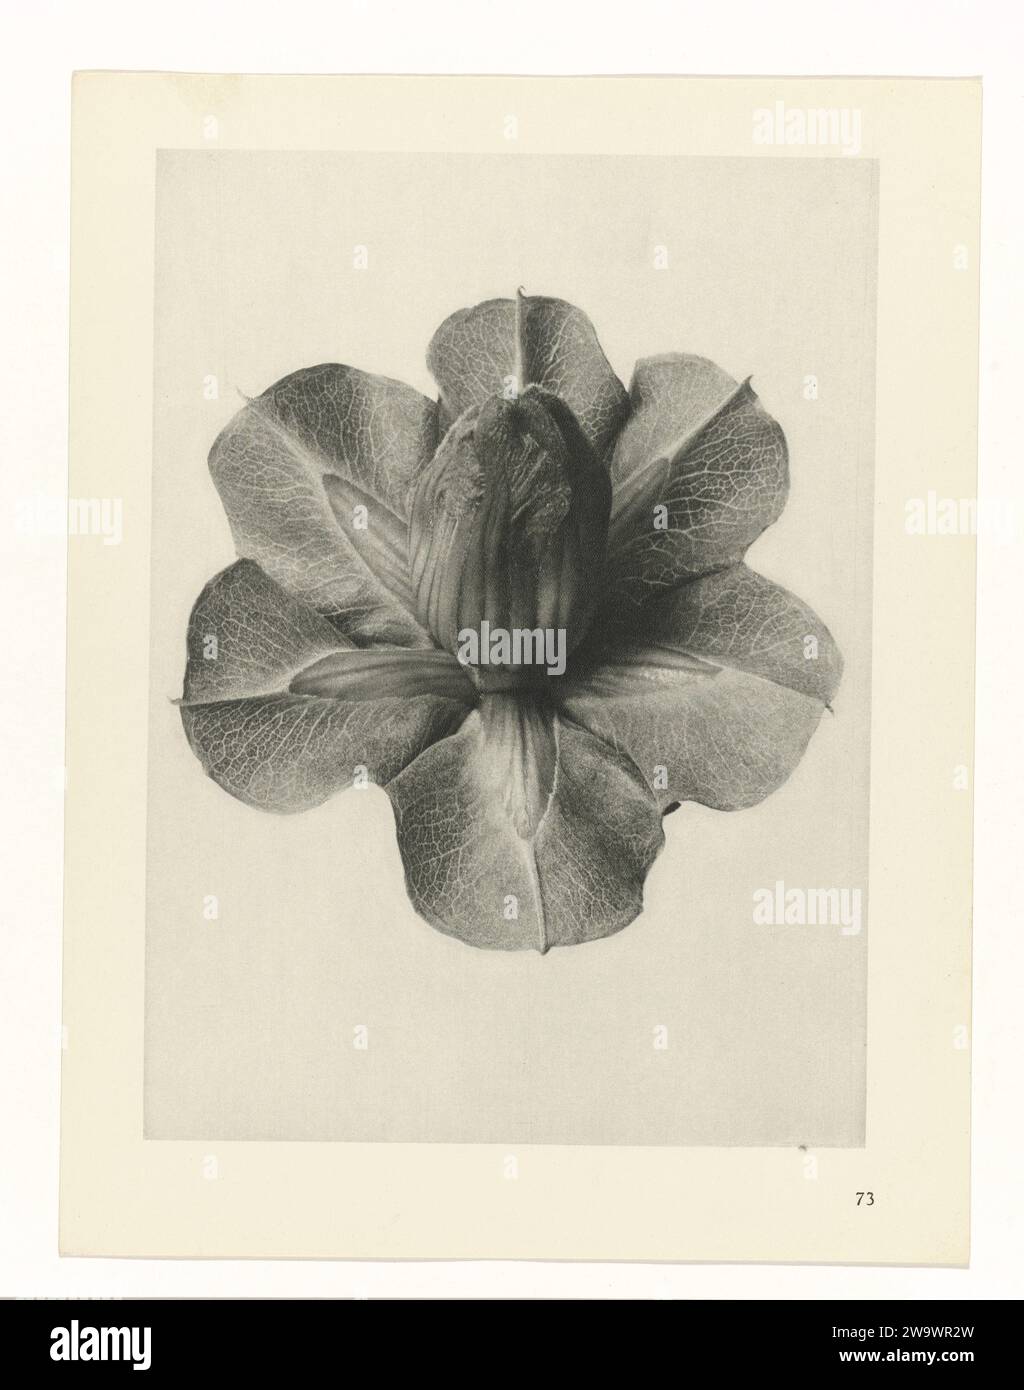 Plant Studies, 1928 photograph Fach enlargement. Afkomstig uit losblady uitgave. Berlin paper. ink  plants (in general) Stock Photo